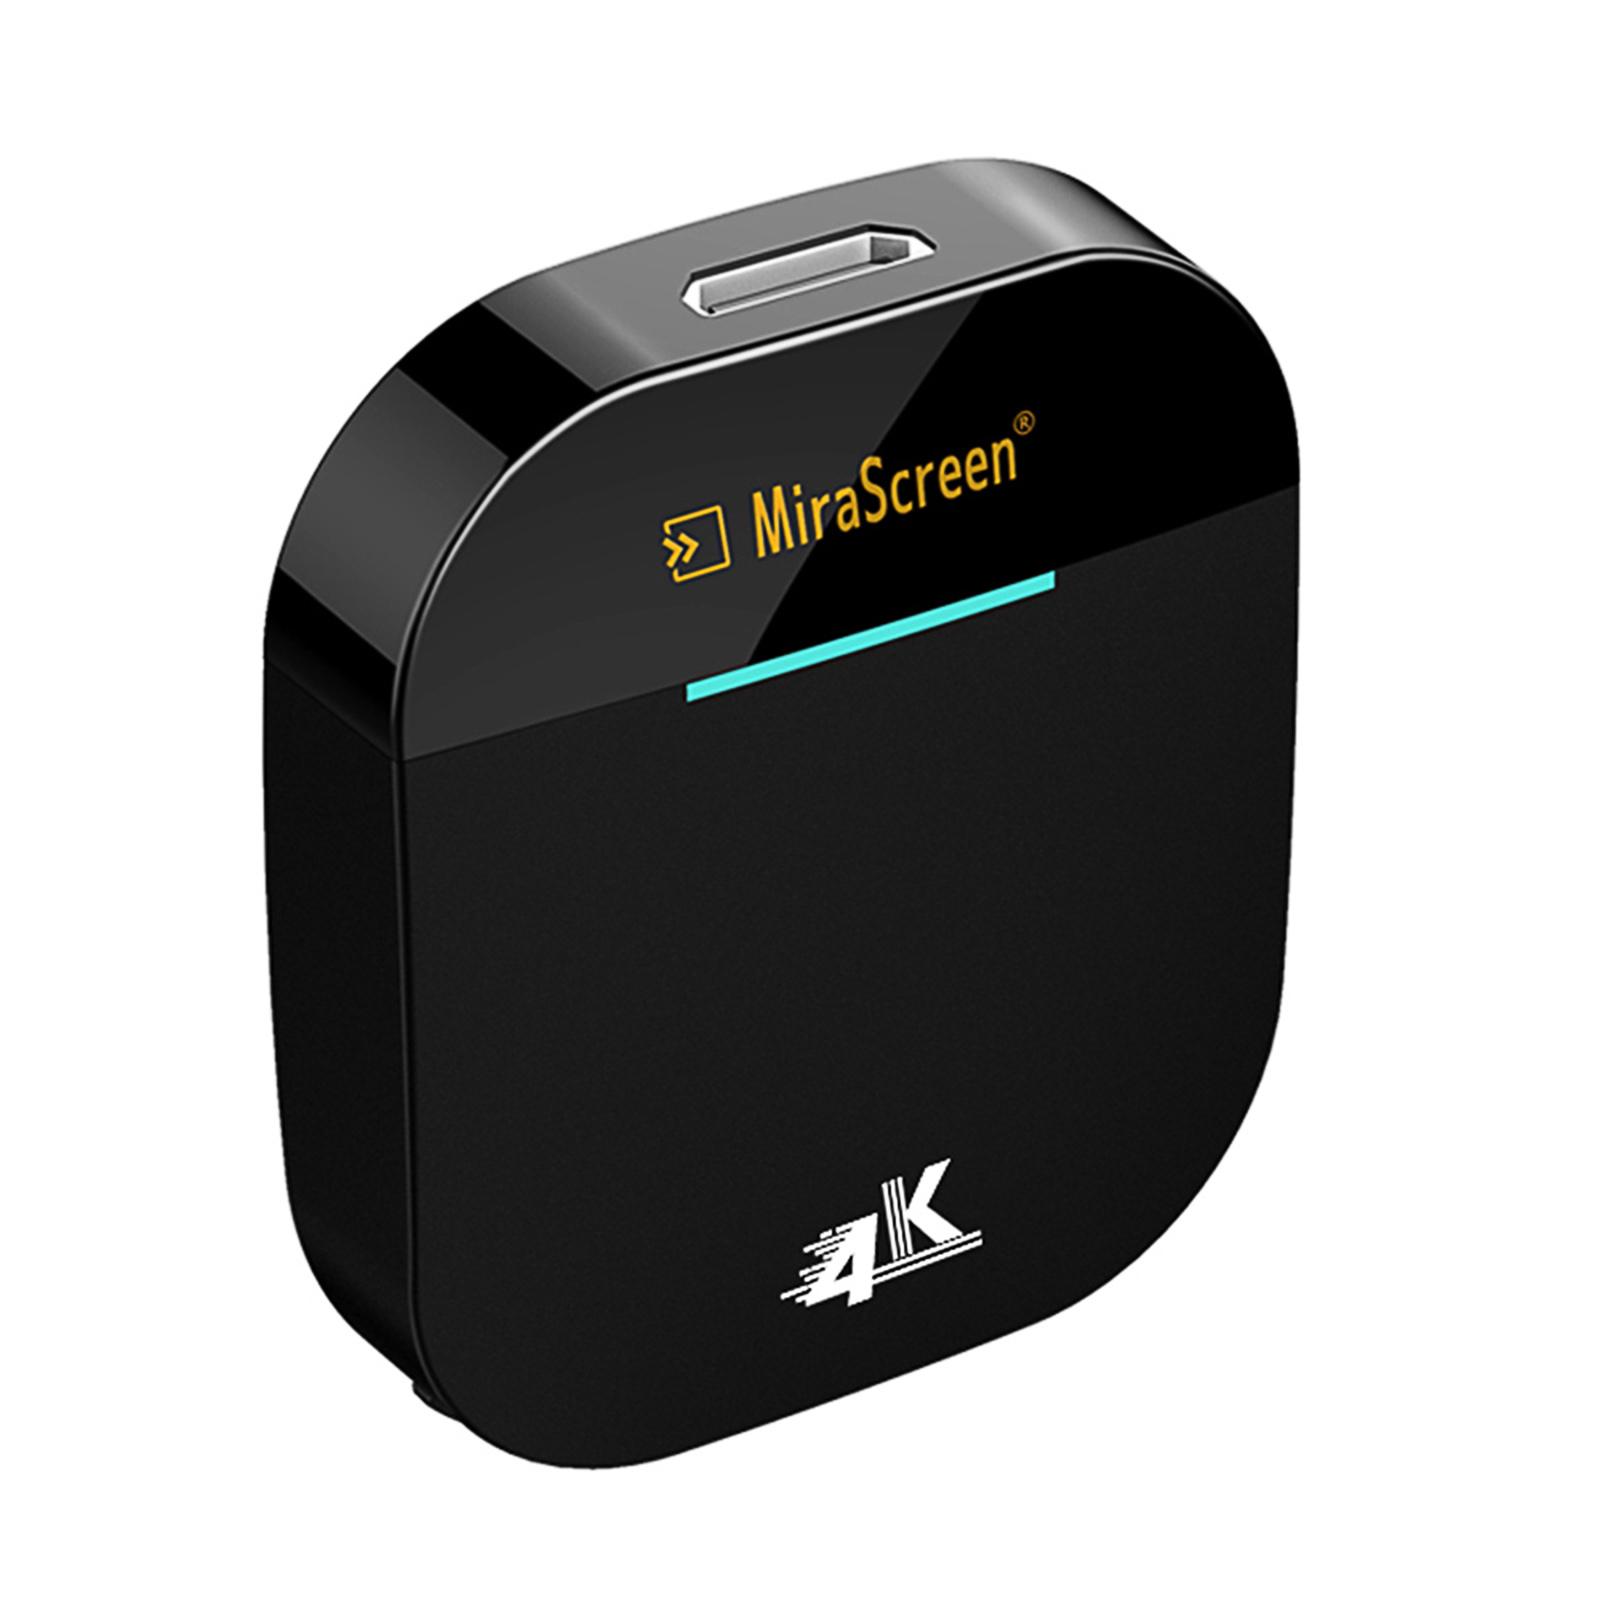 Đầu thu Mirascreen G5 Plus 2.4G / 5G WiFi  4K UHD TV cho IOS